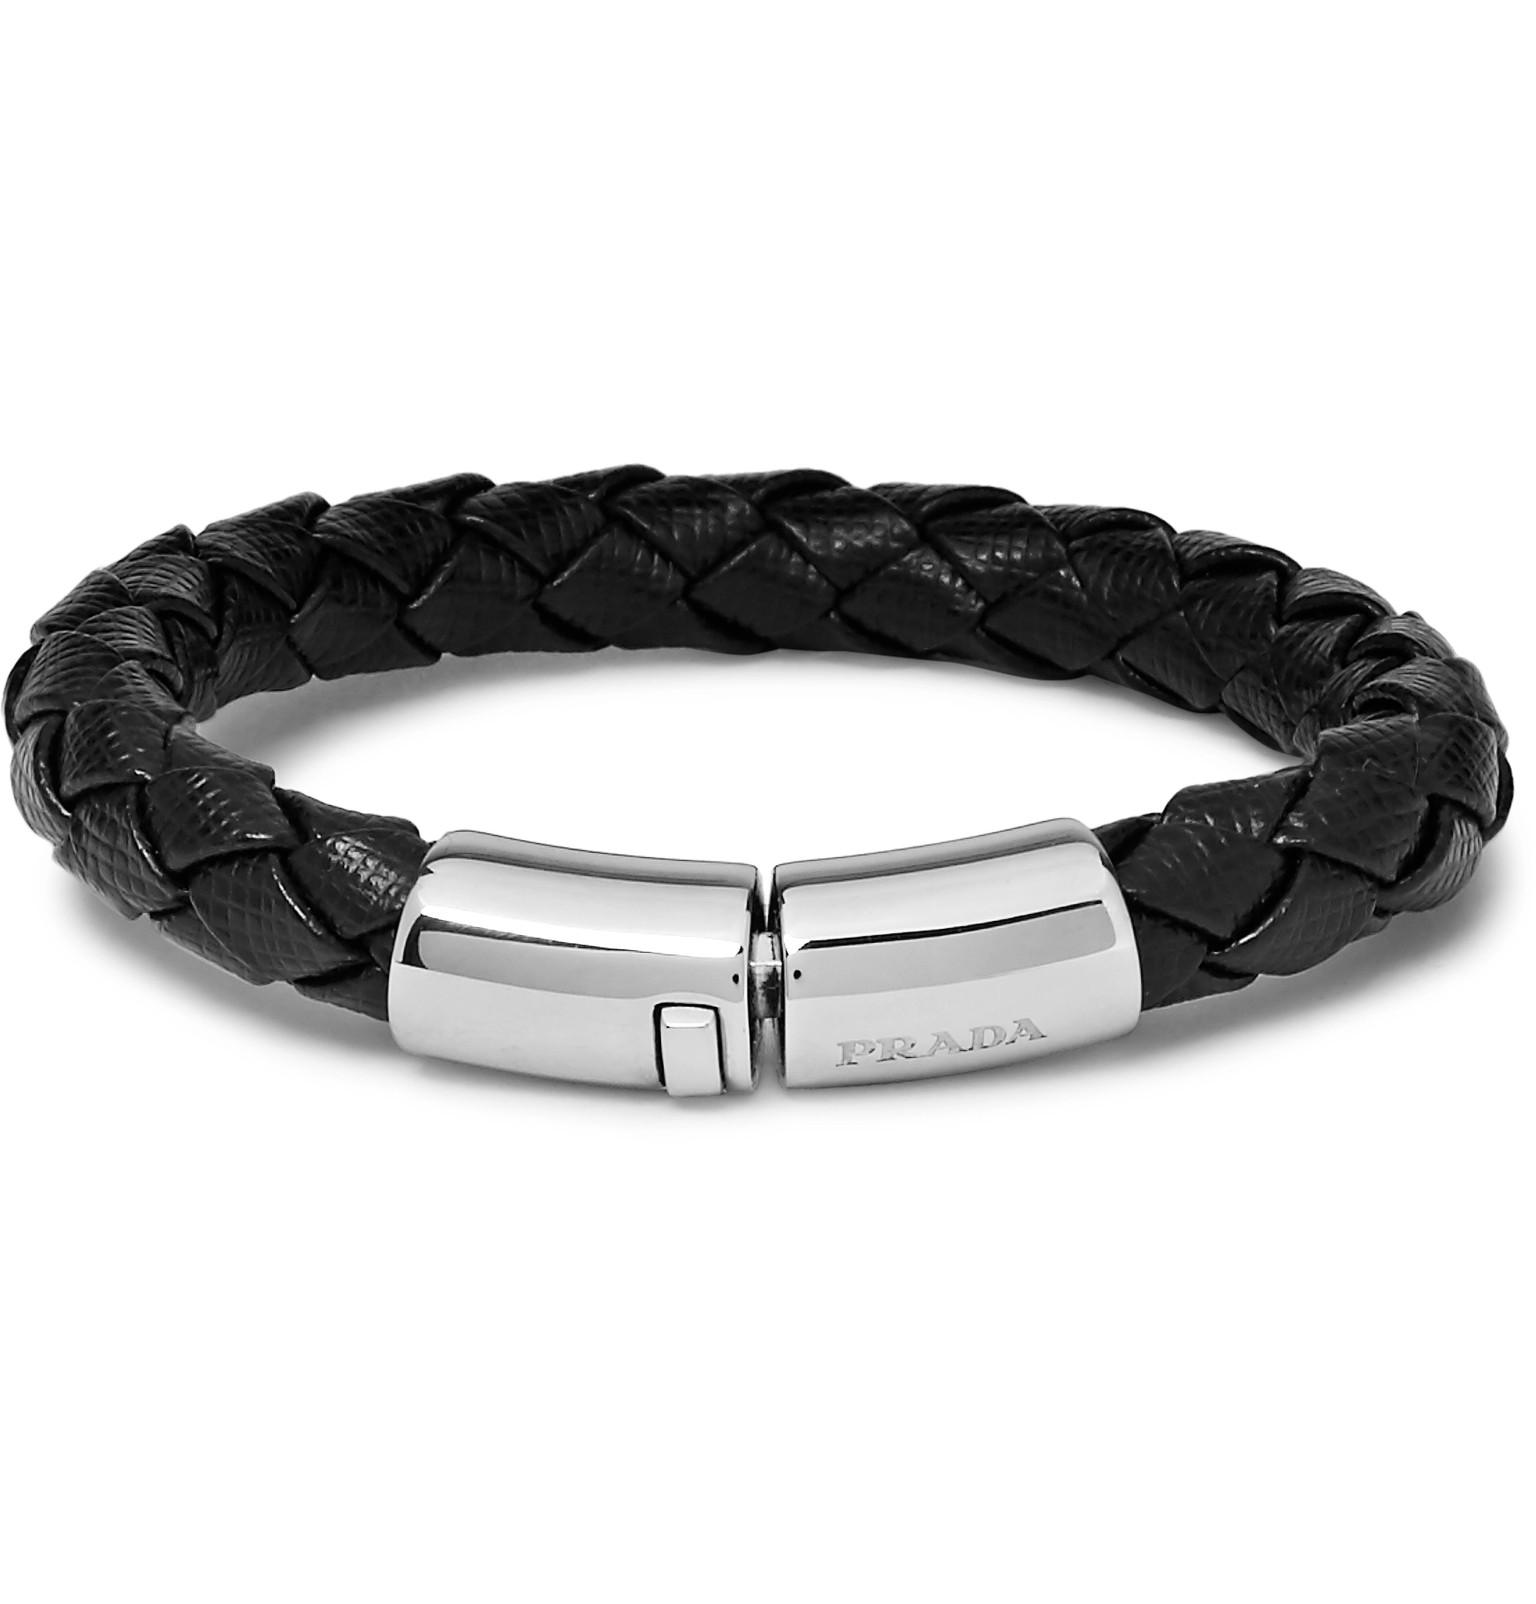 Lyst - Prada Woven Saffiano Leather And Silver-tone Bracelet in Black ...